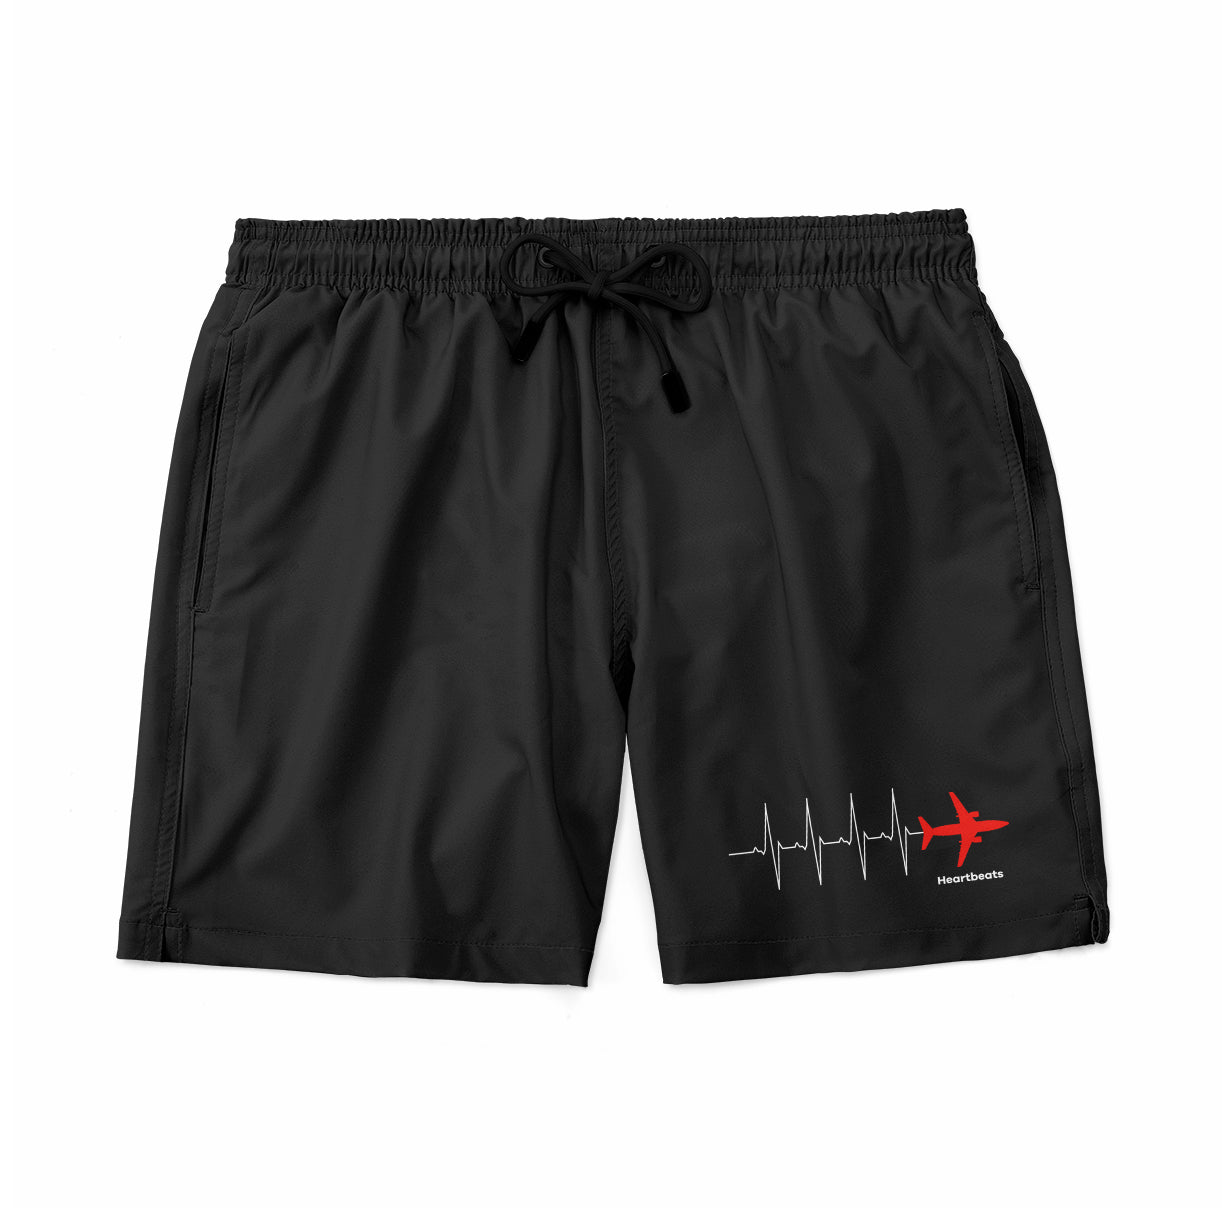 Aviation Heartbeats Designed Swim Trunks & Shorts